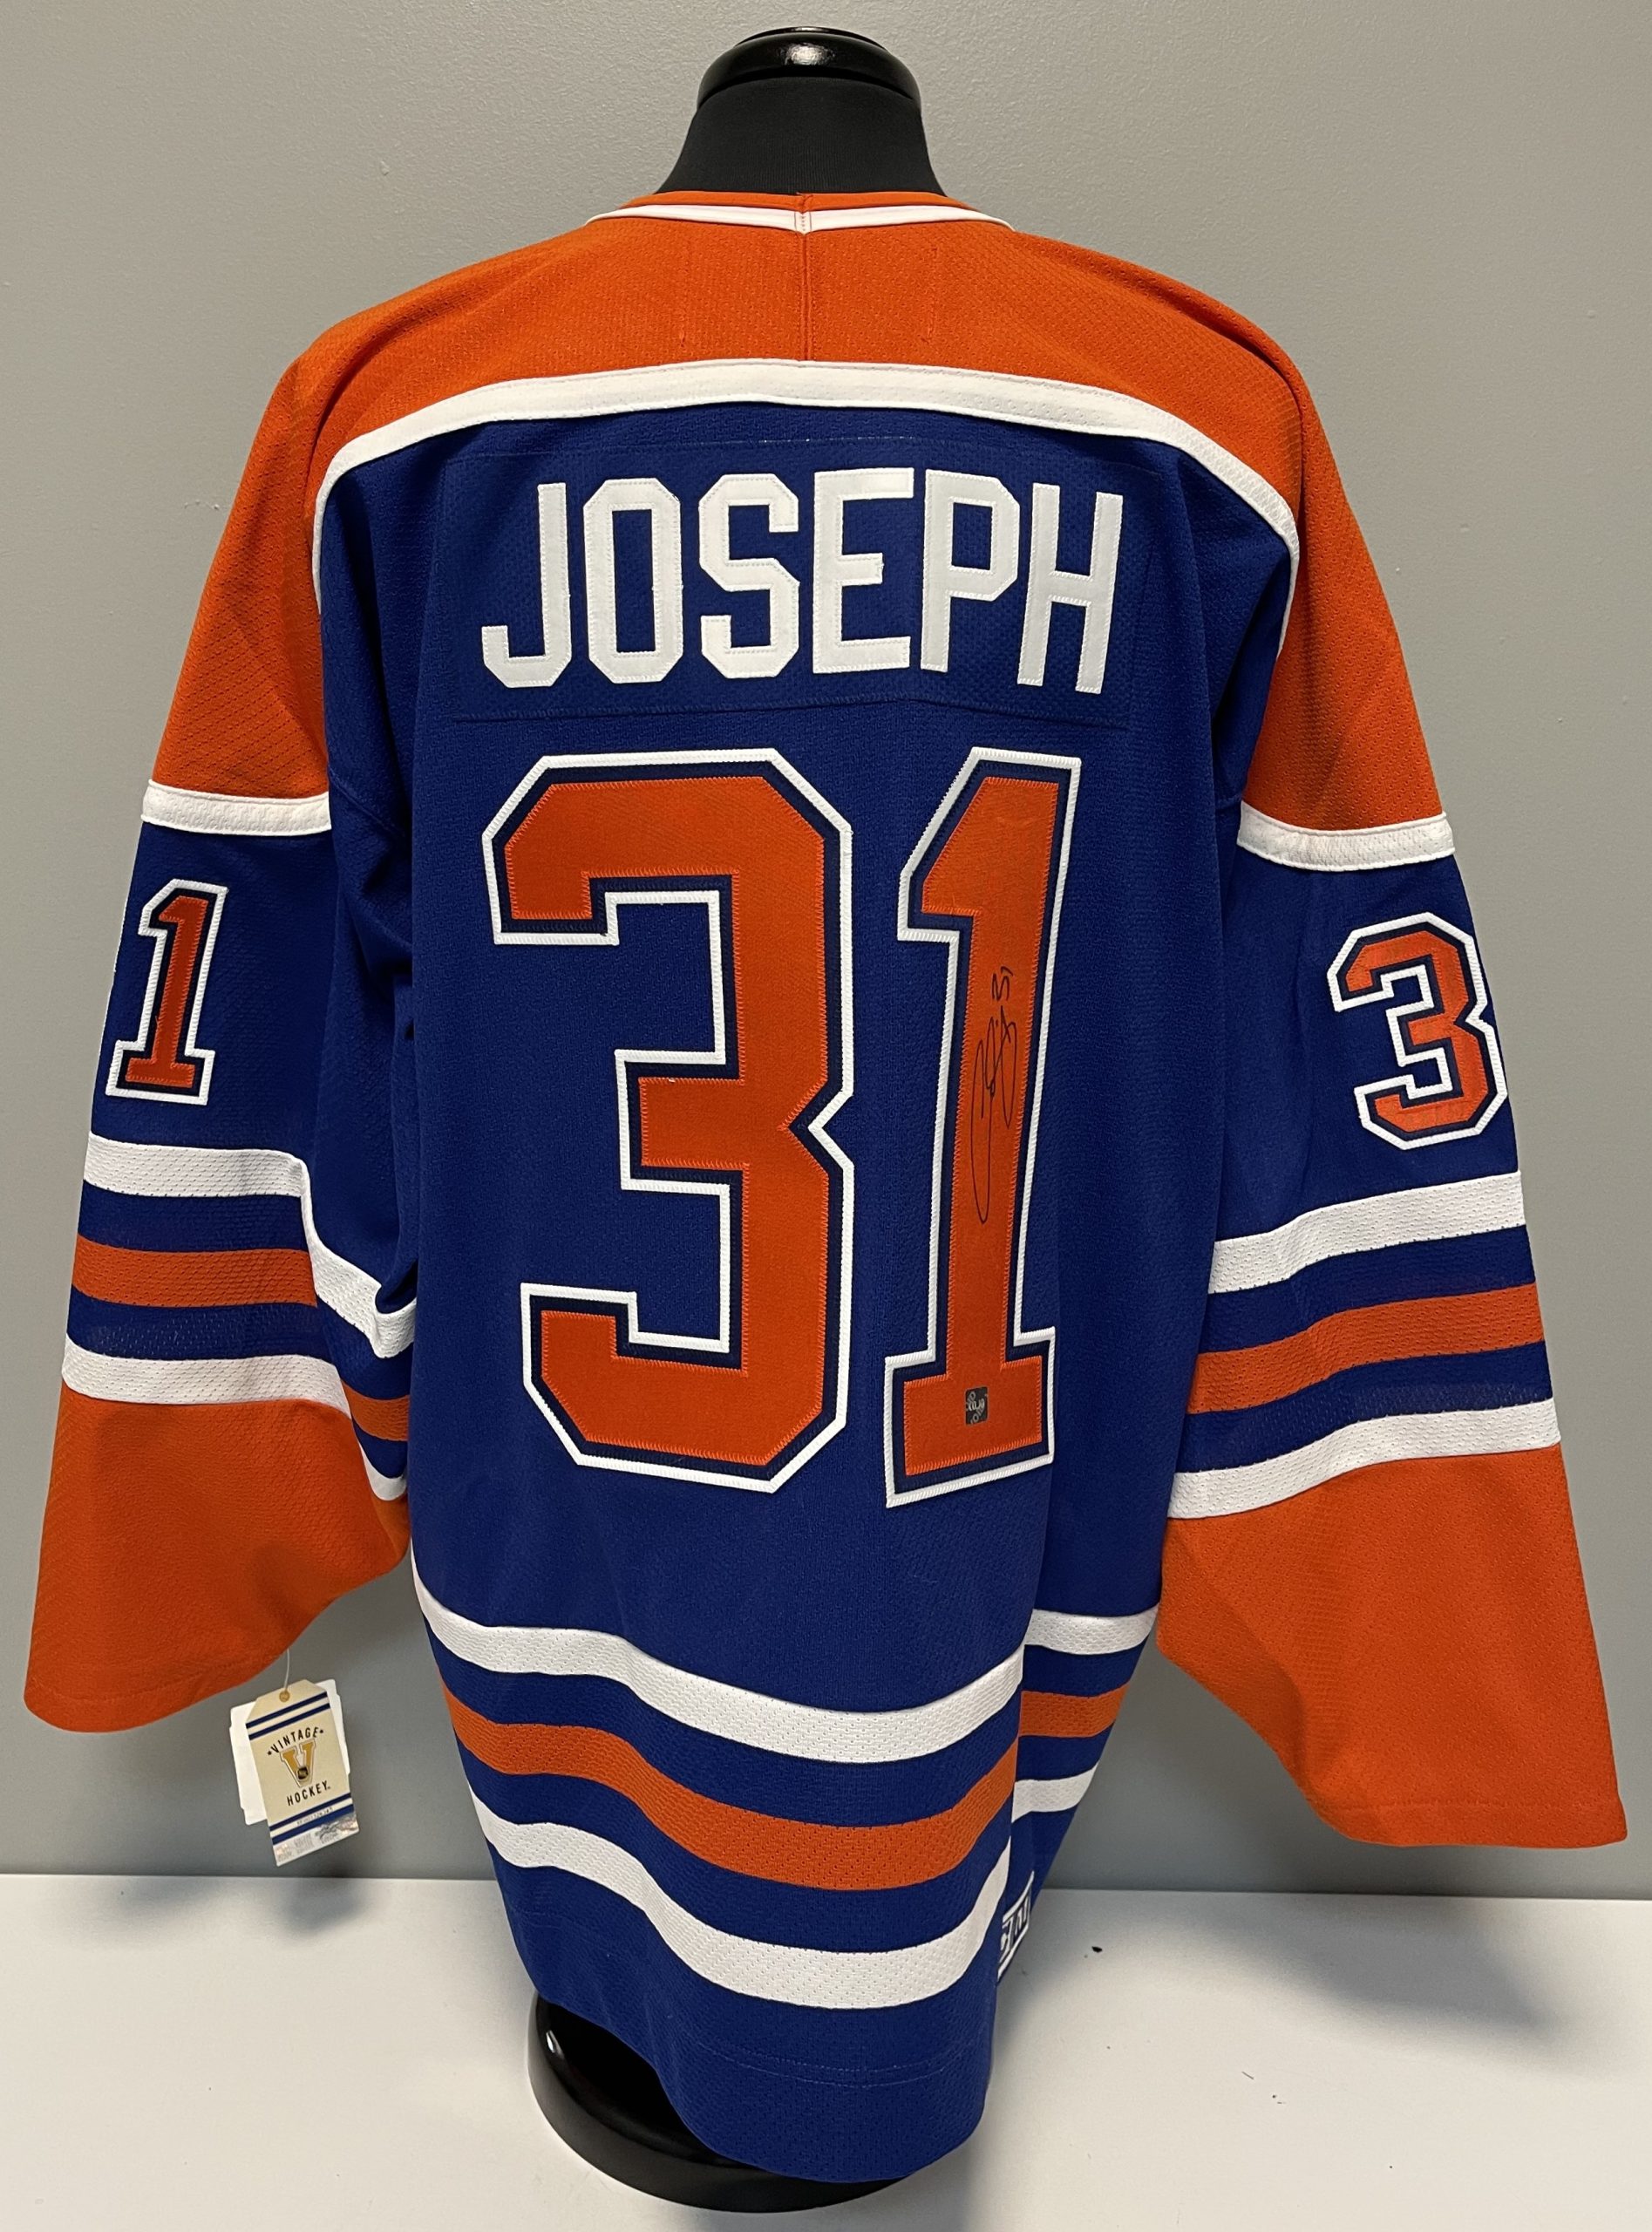 Curtis Joseph #31 - Autographed Edmonton Oilers Navy Blue CCM Replica  Hockey Jersey - NHL Auctions